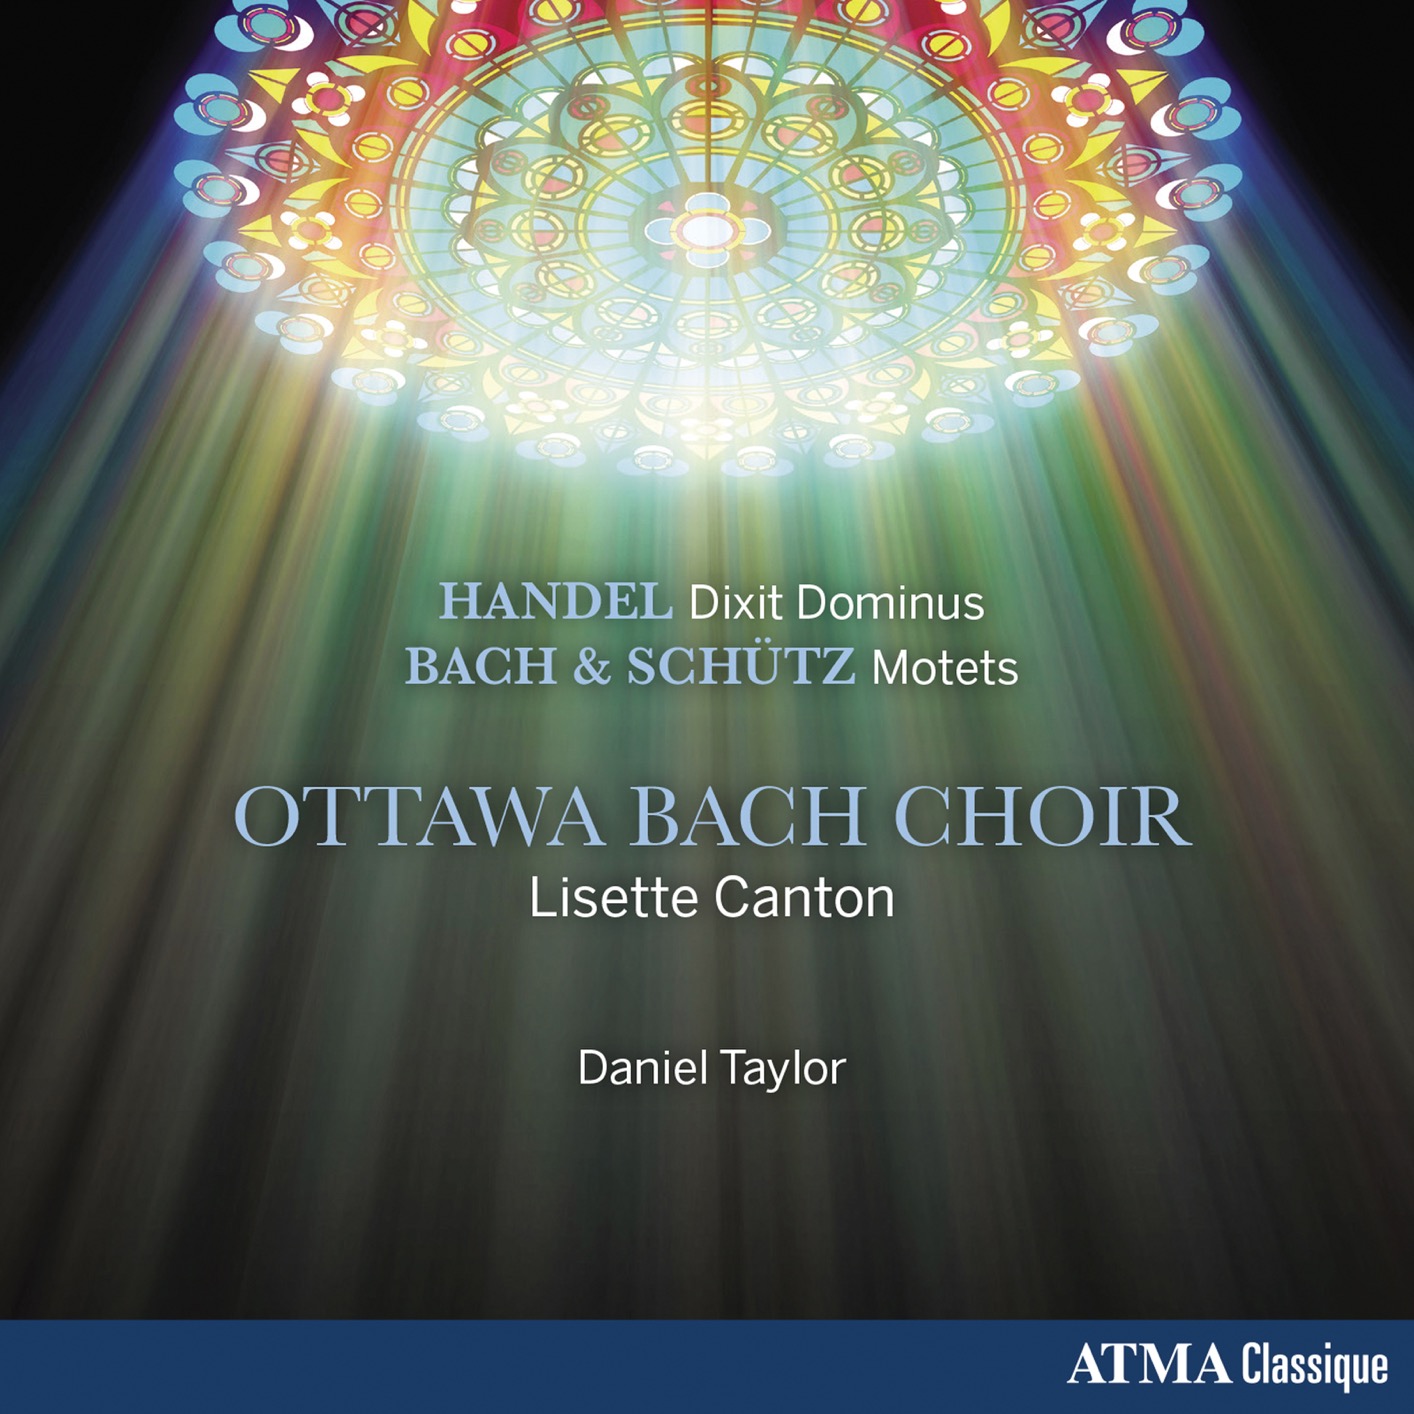 Ottawa Bach Choir, Daniel Taylor & Lisette Canton – Handel Dixit Dominus, Bach & Schutz Motets (2019) [FLAC 24bit/96kHz]